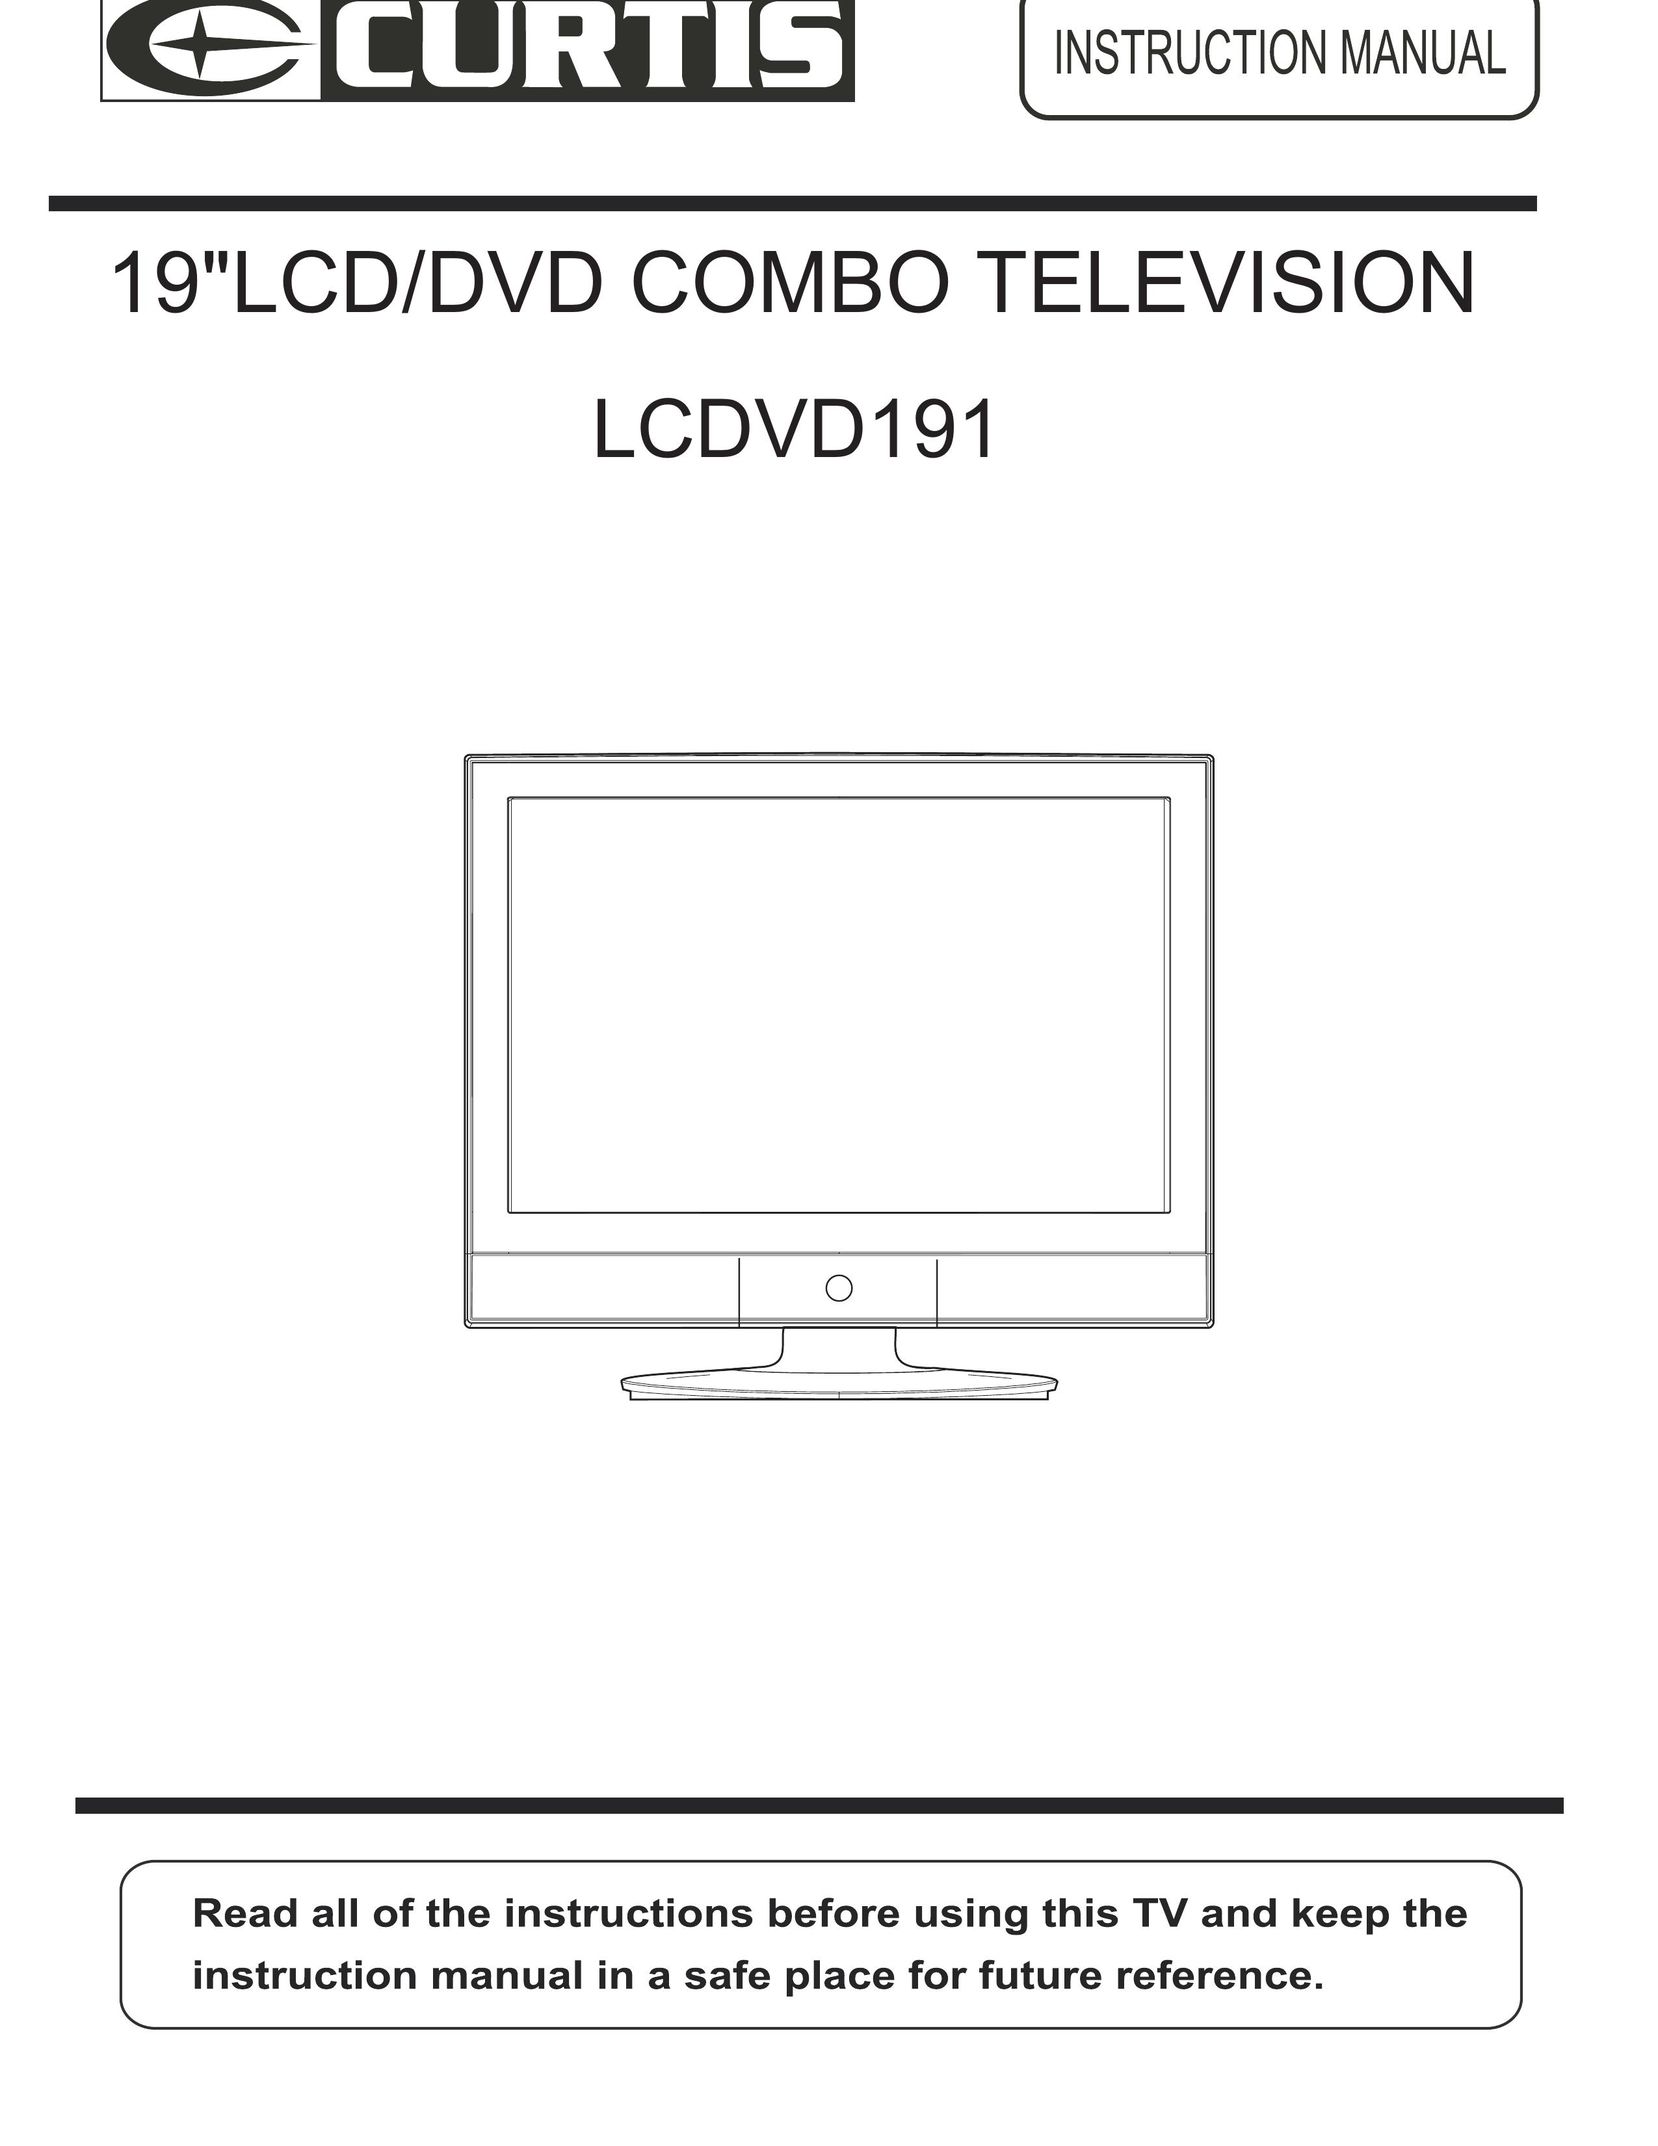 Curtis LCDVD191 TV DVD Combo User Manual